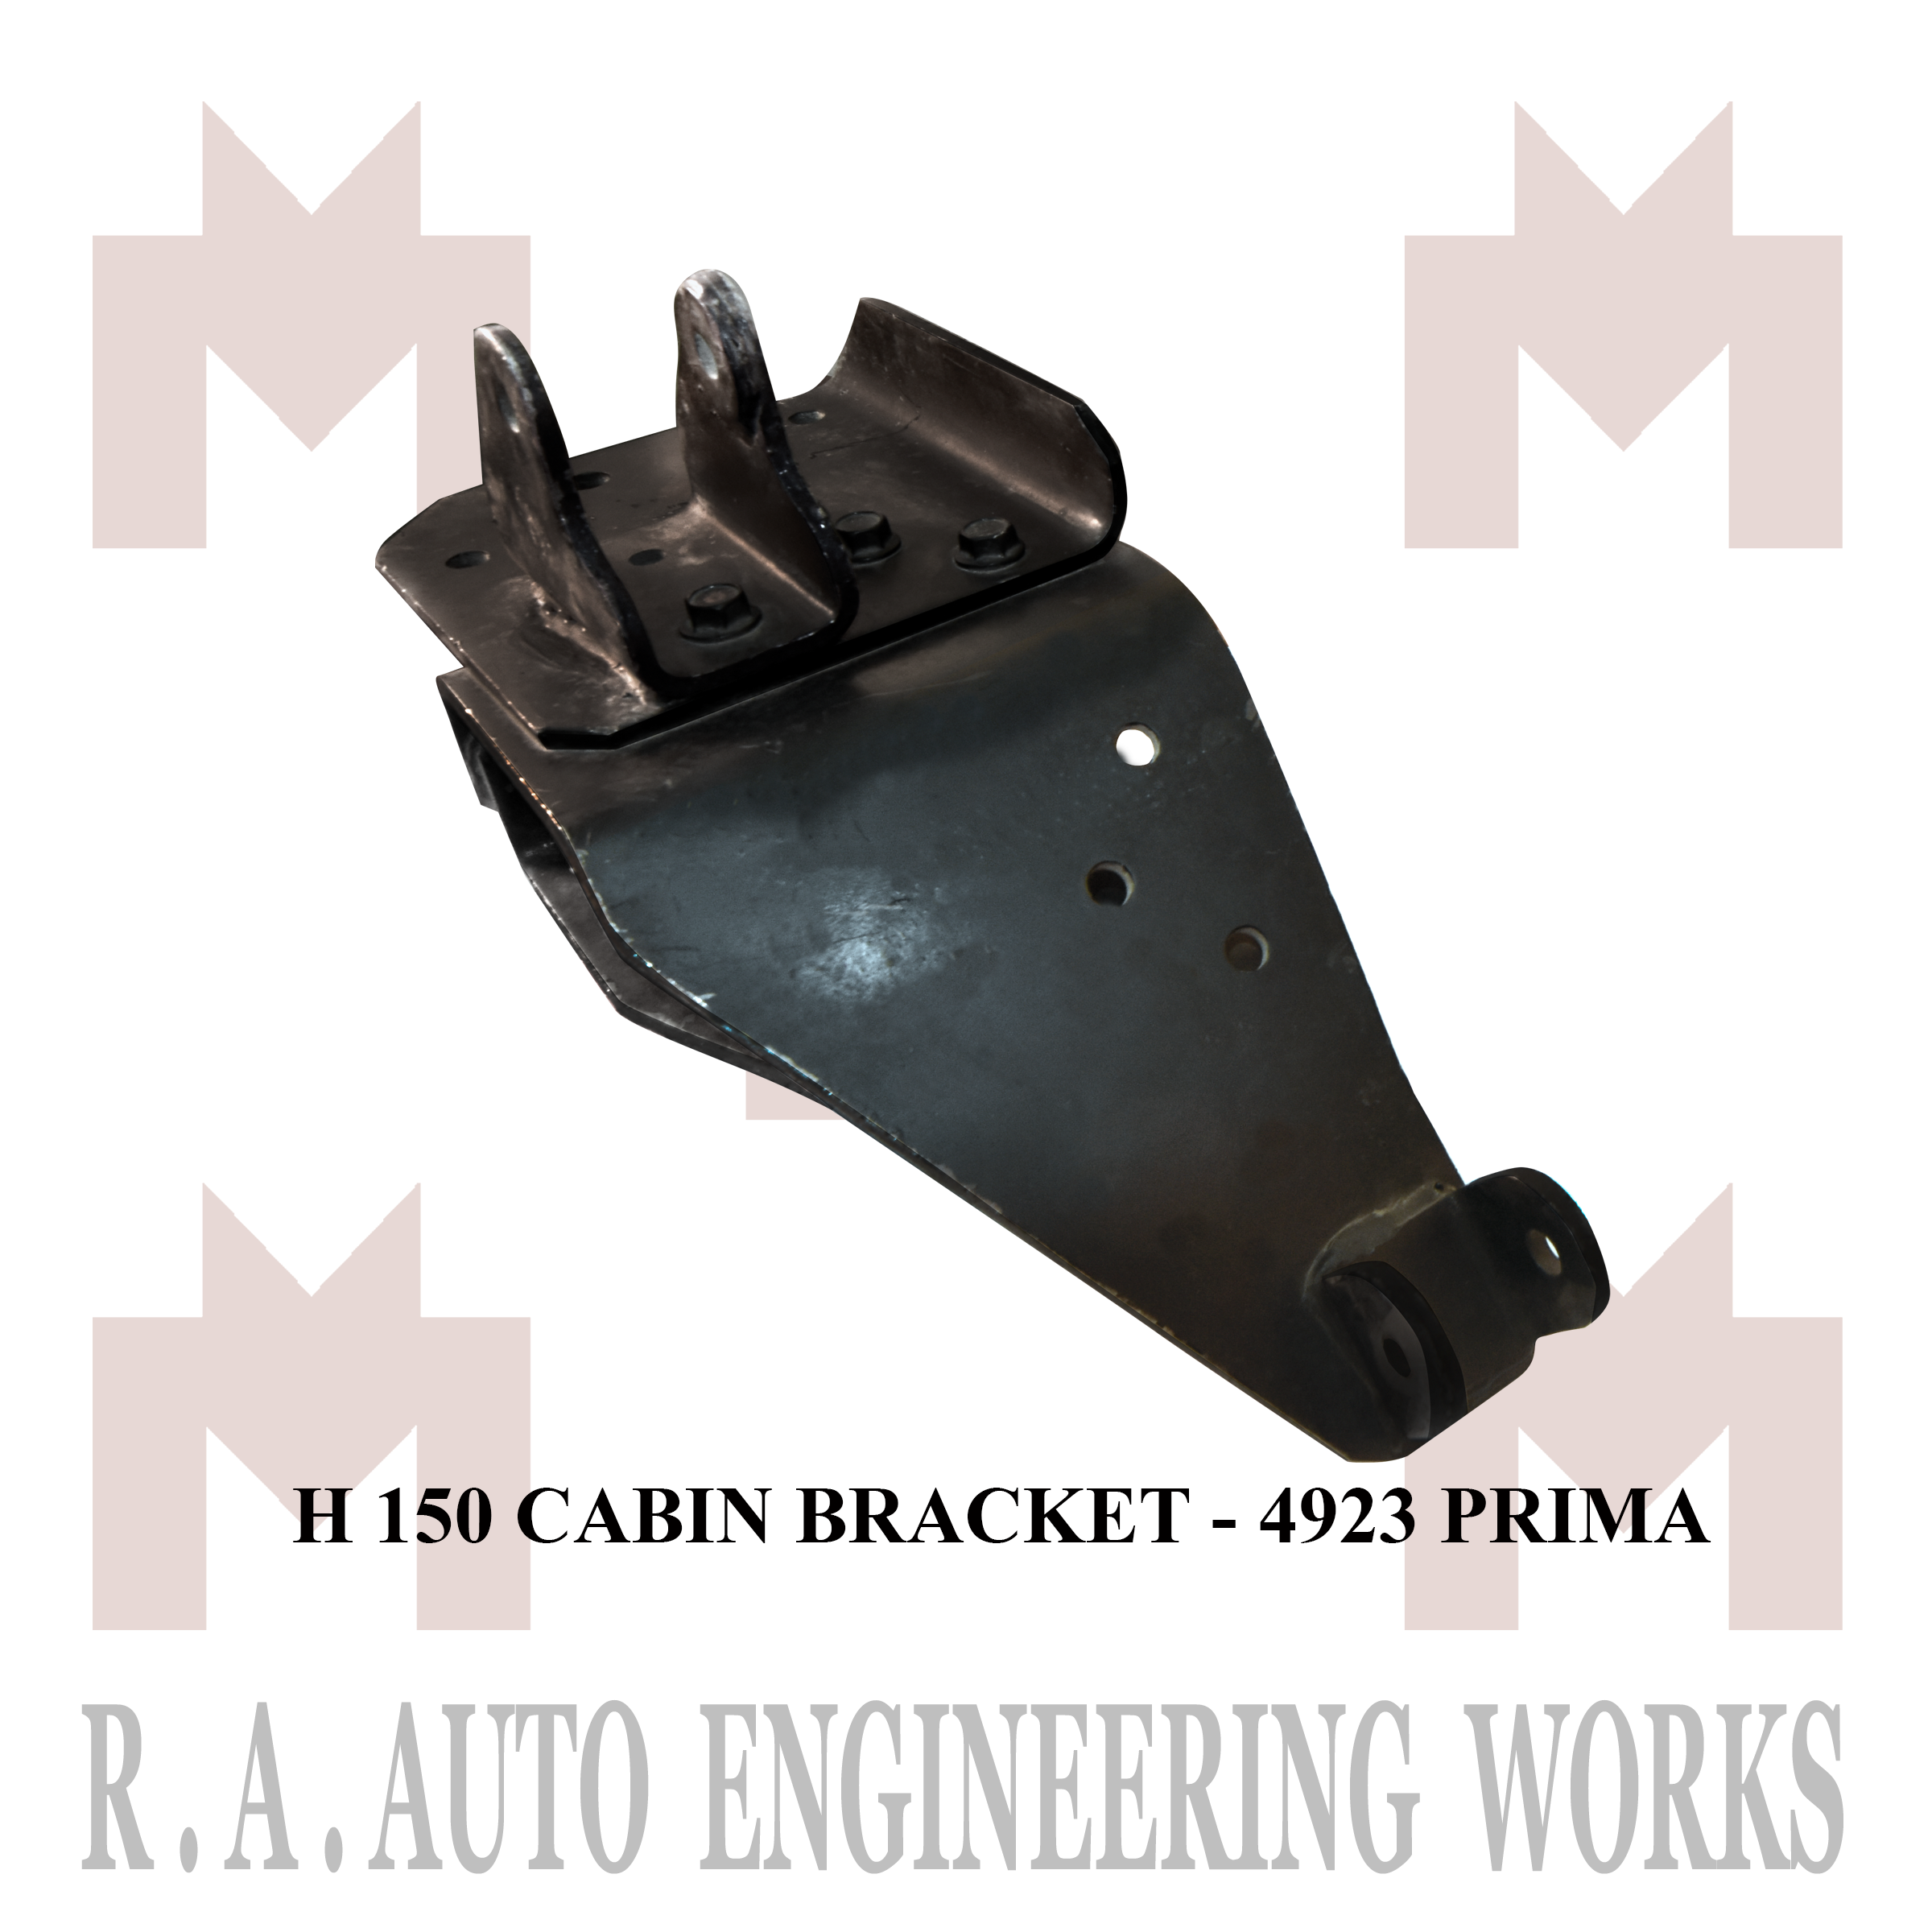 H 150 CABIN BRACKET - 4923 PRIMA